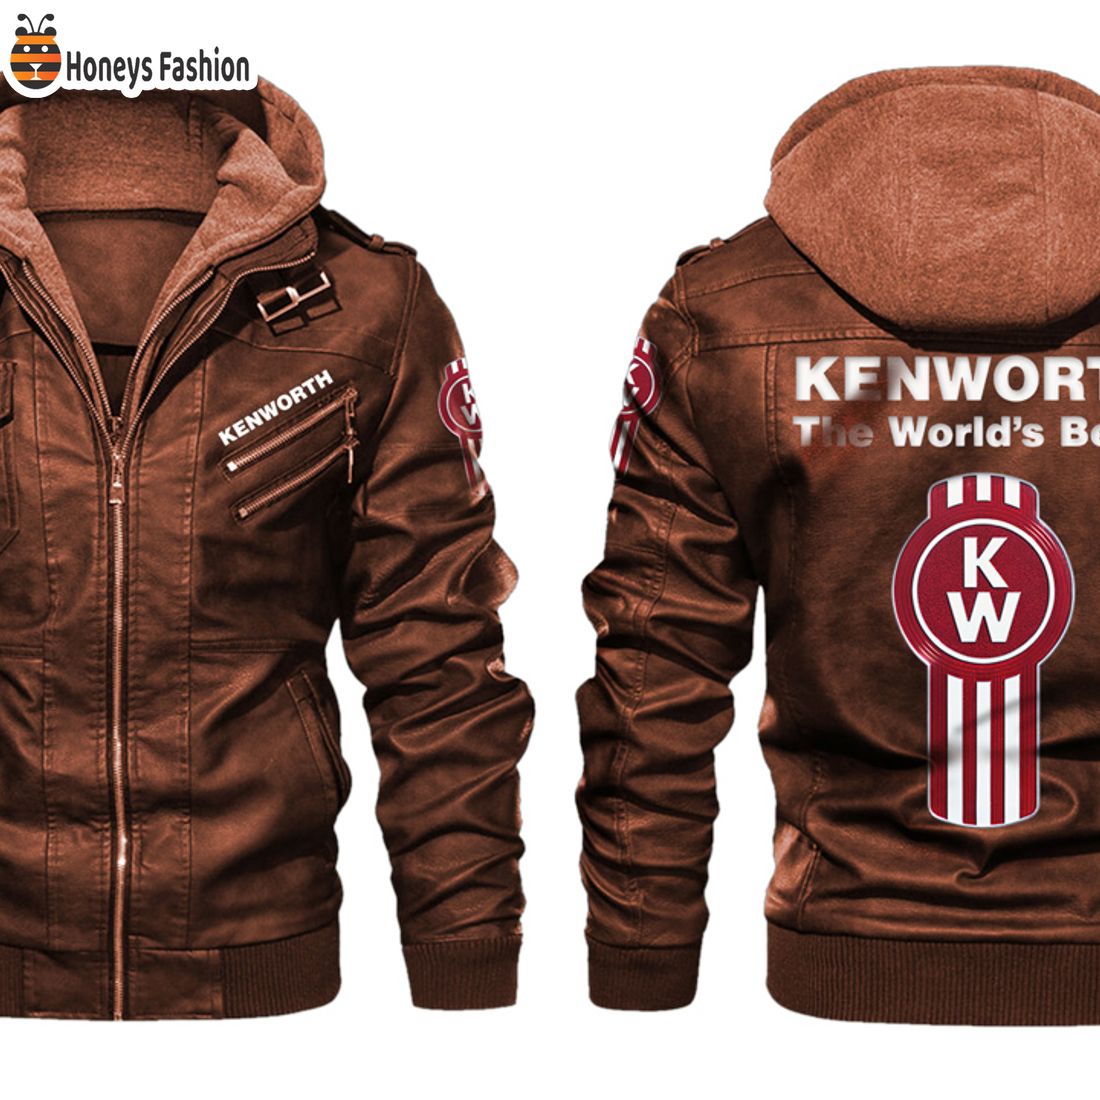 SELLER Kenworth the worlds best leather jacket